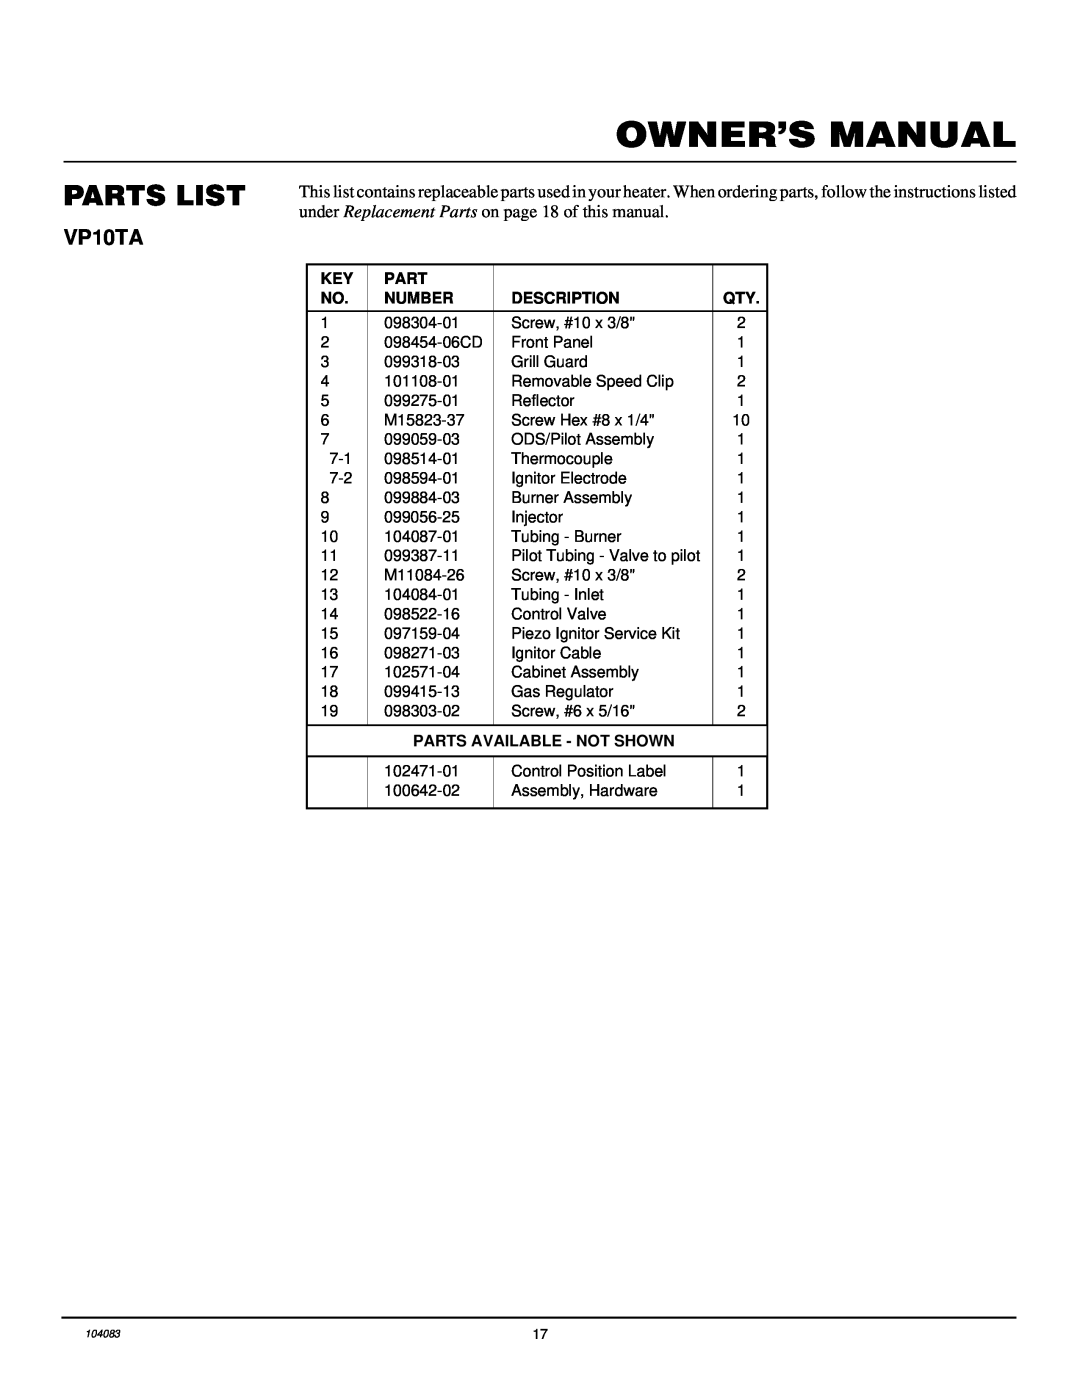 Desa VP10TA installation manual Parts List, Number, Description, Parts Available - Not Shown 